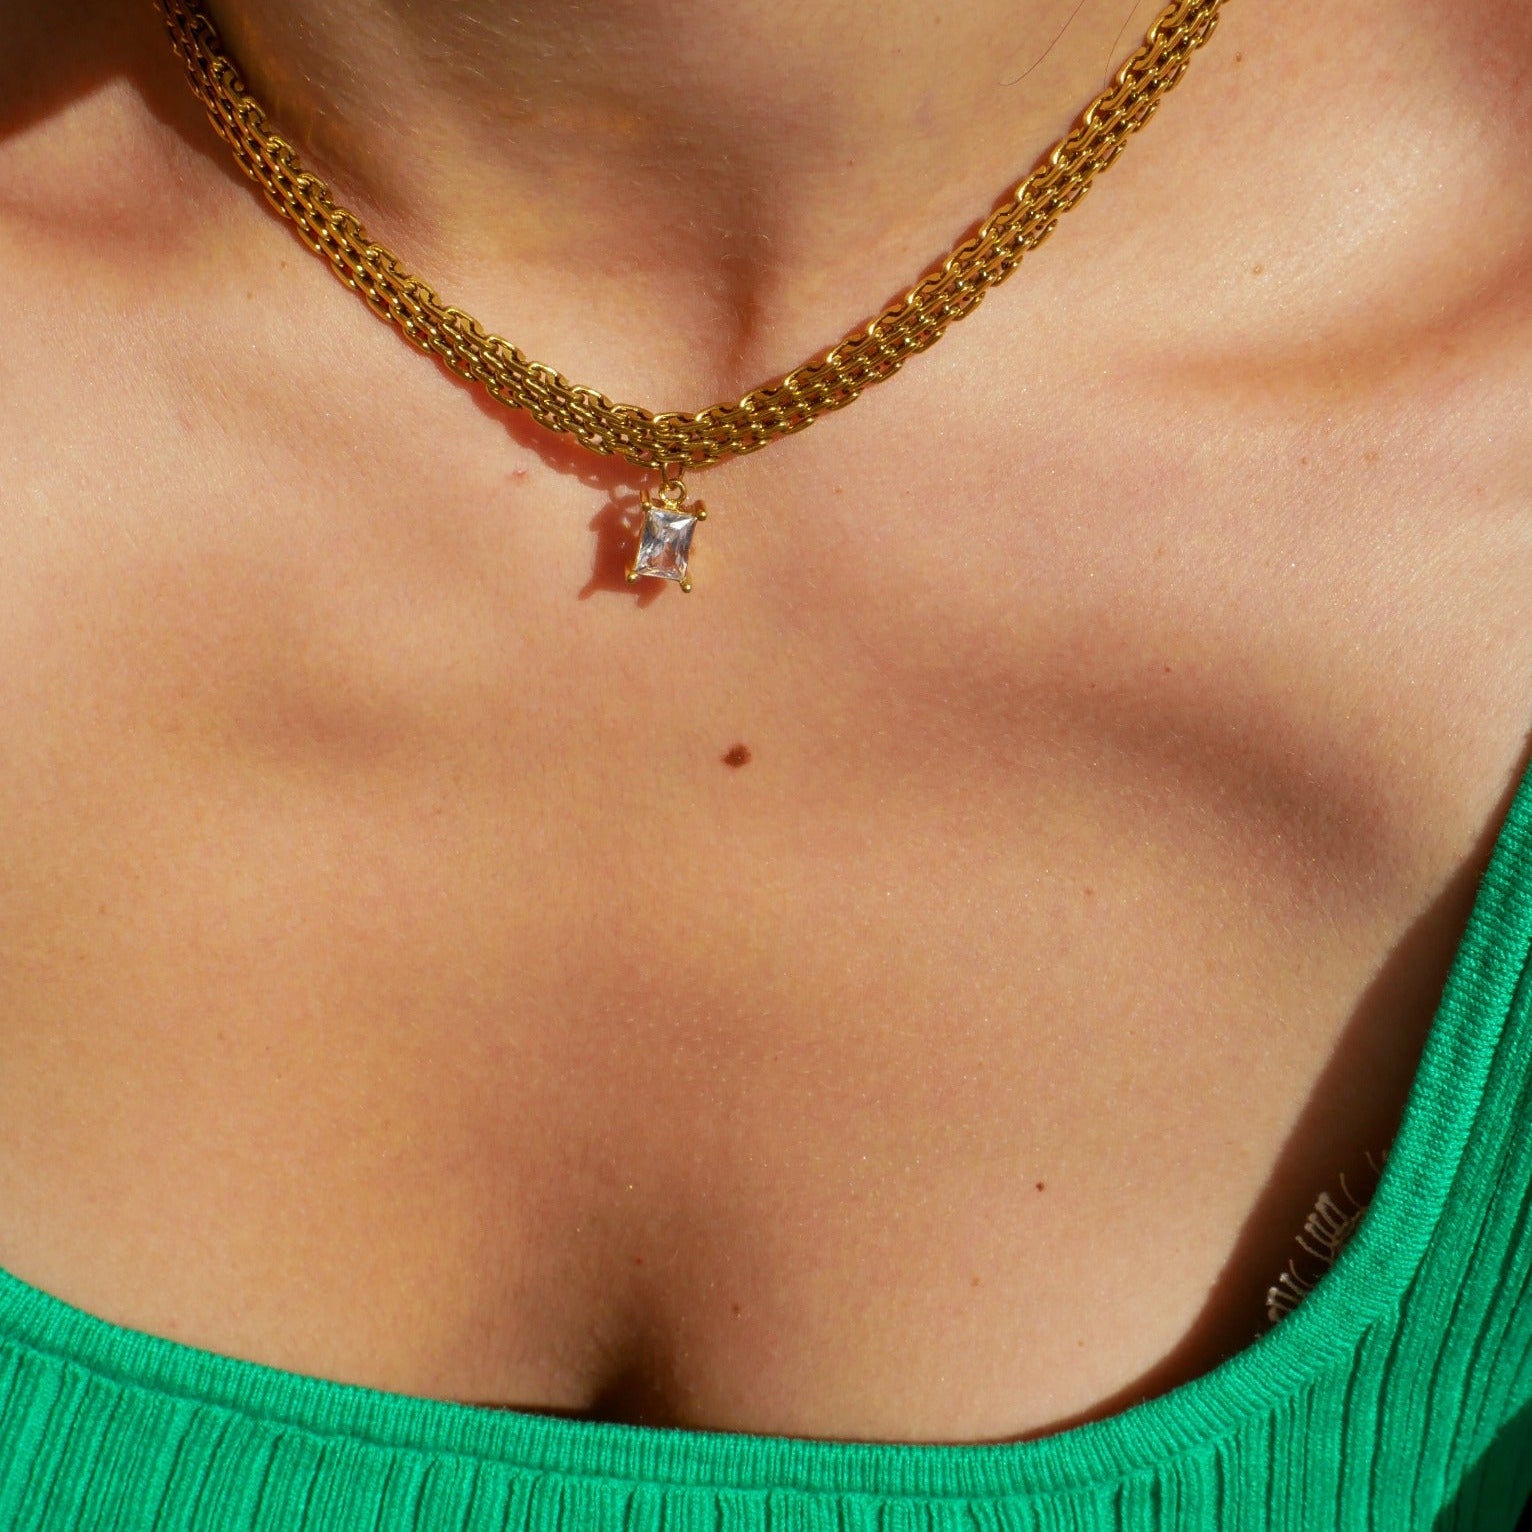 Delphine Pendant Gold Chain by Koréil Jewelry